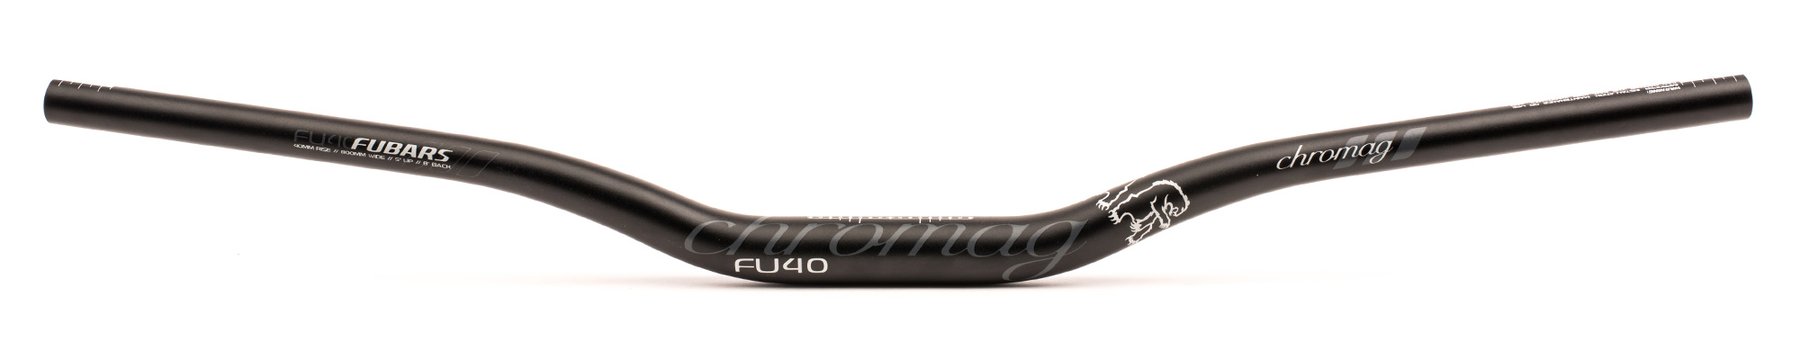 Productfoto van CHROMAG Fubars FU40 Rizer Bar 31.8 MTB Handlebar - 800mm - black